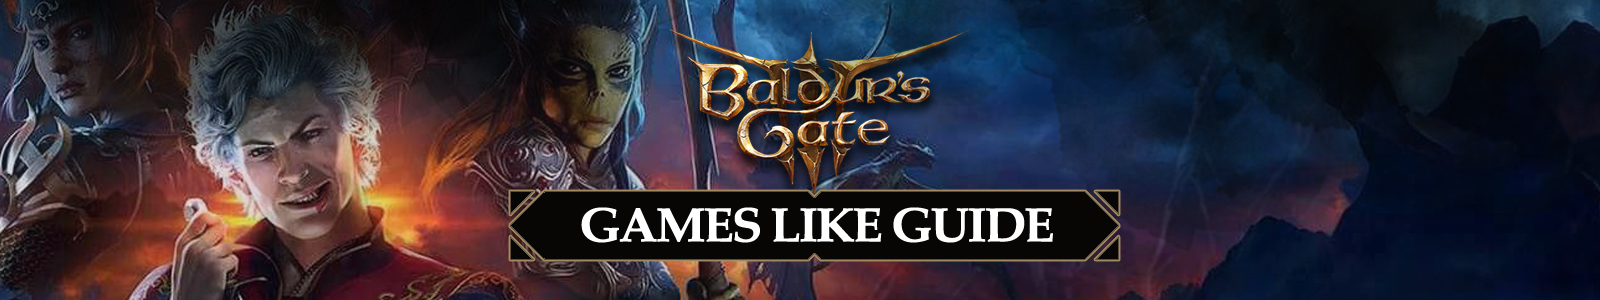 Guida a giochi simili a Baldurs Gate 3